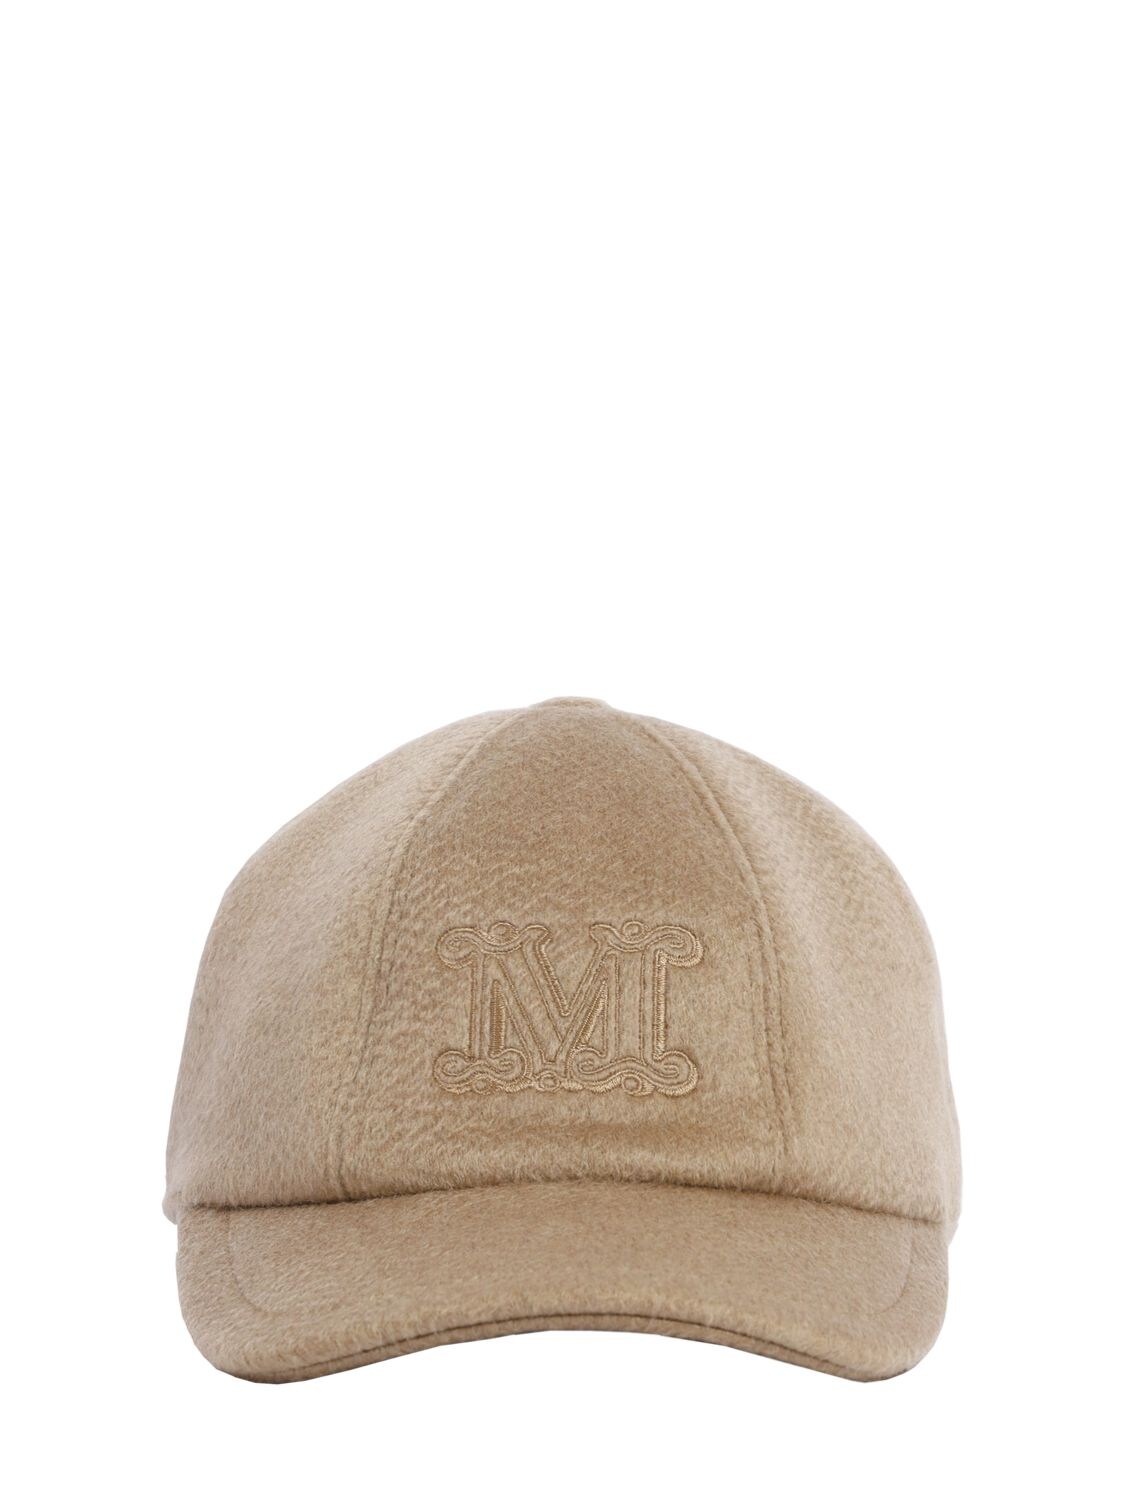 MAX MARA Hats | ModeSens